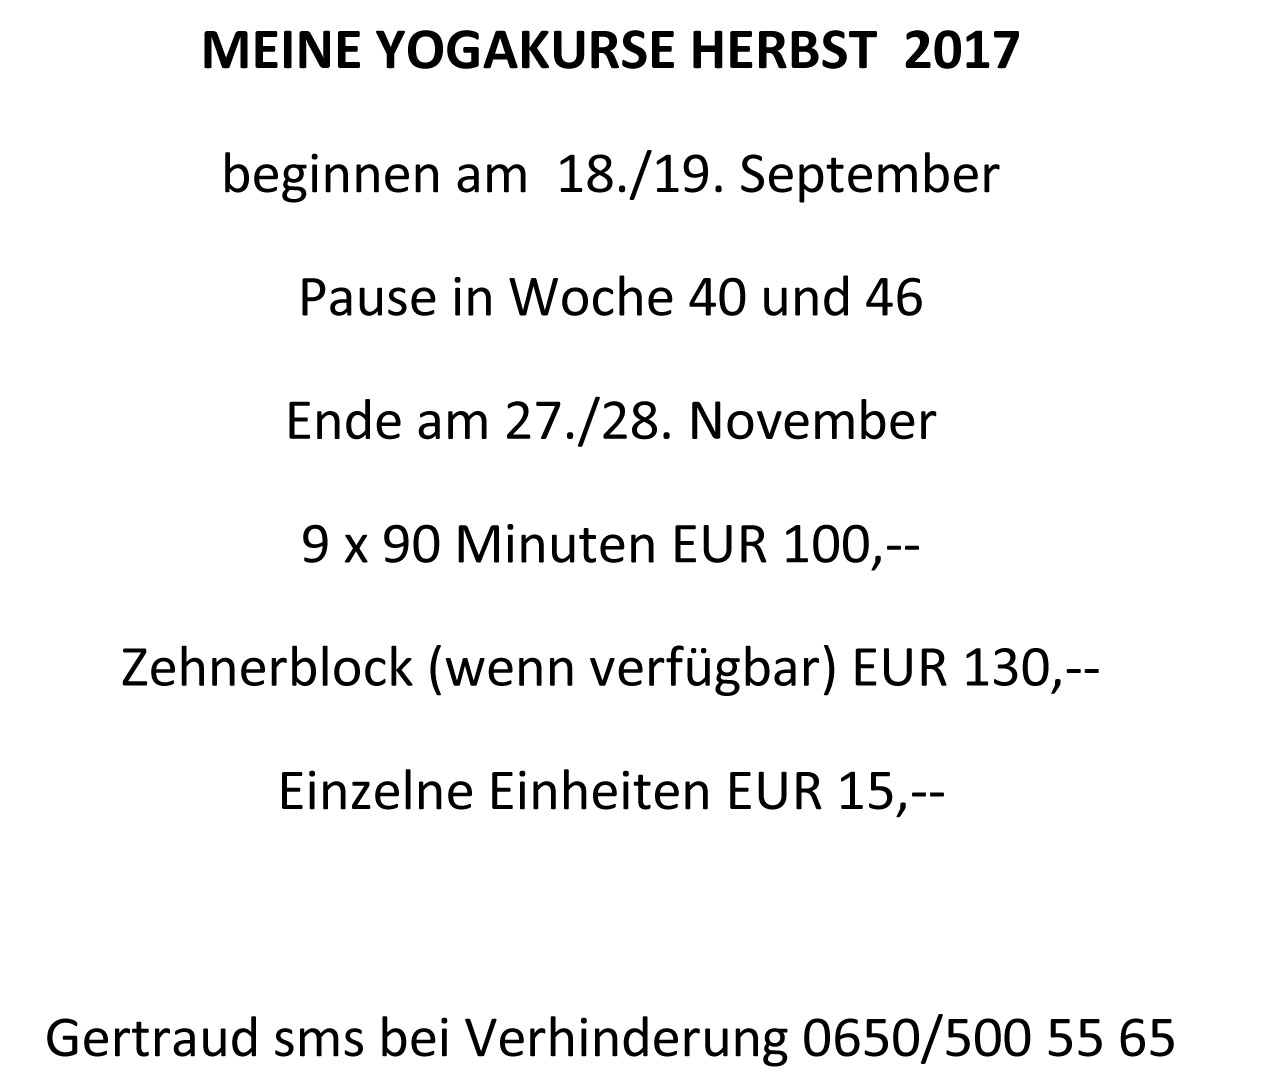 Vorschau Yoga Kurse Herbst 2017